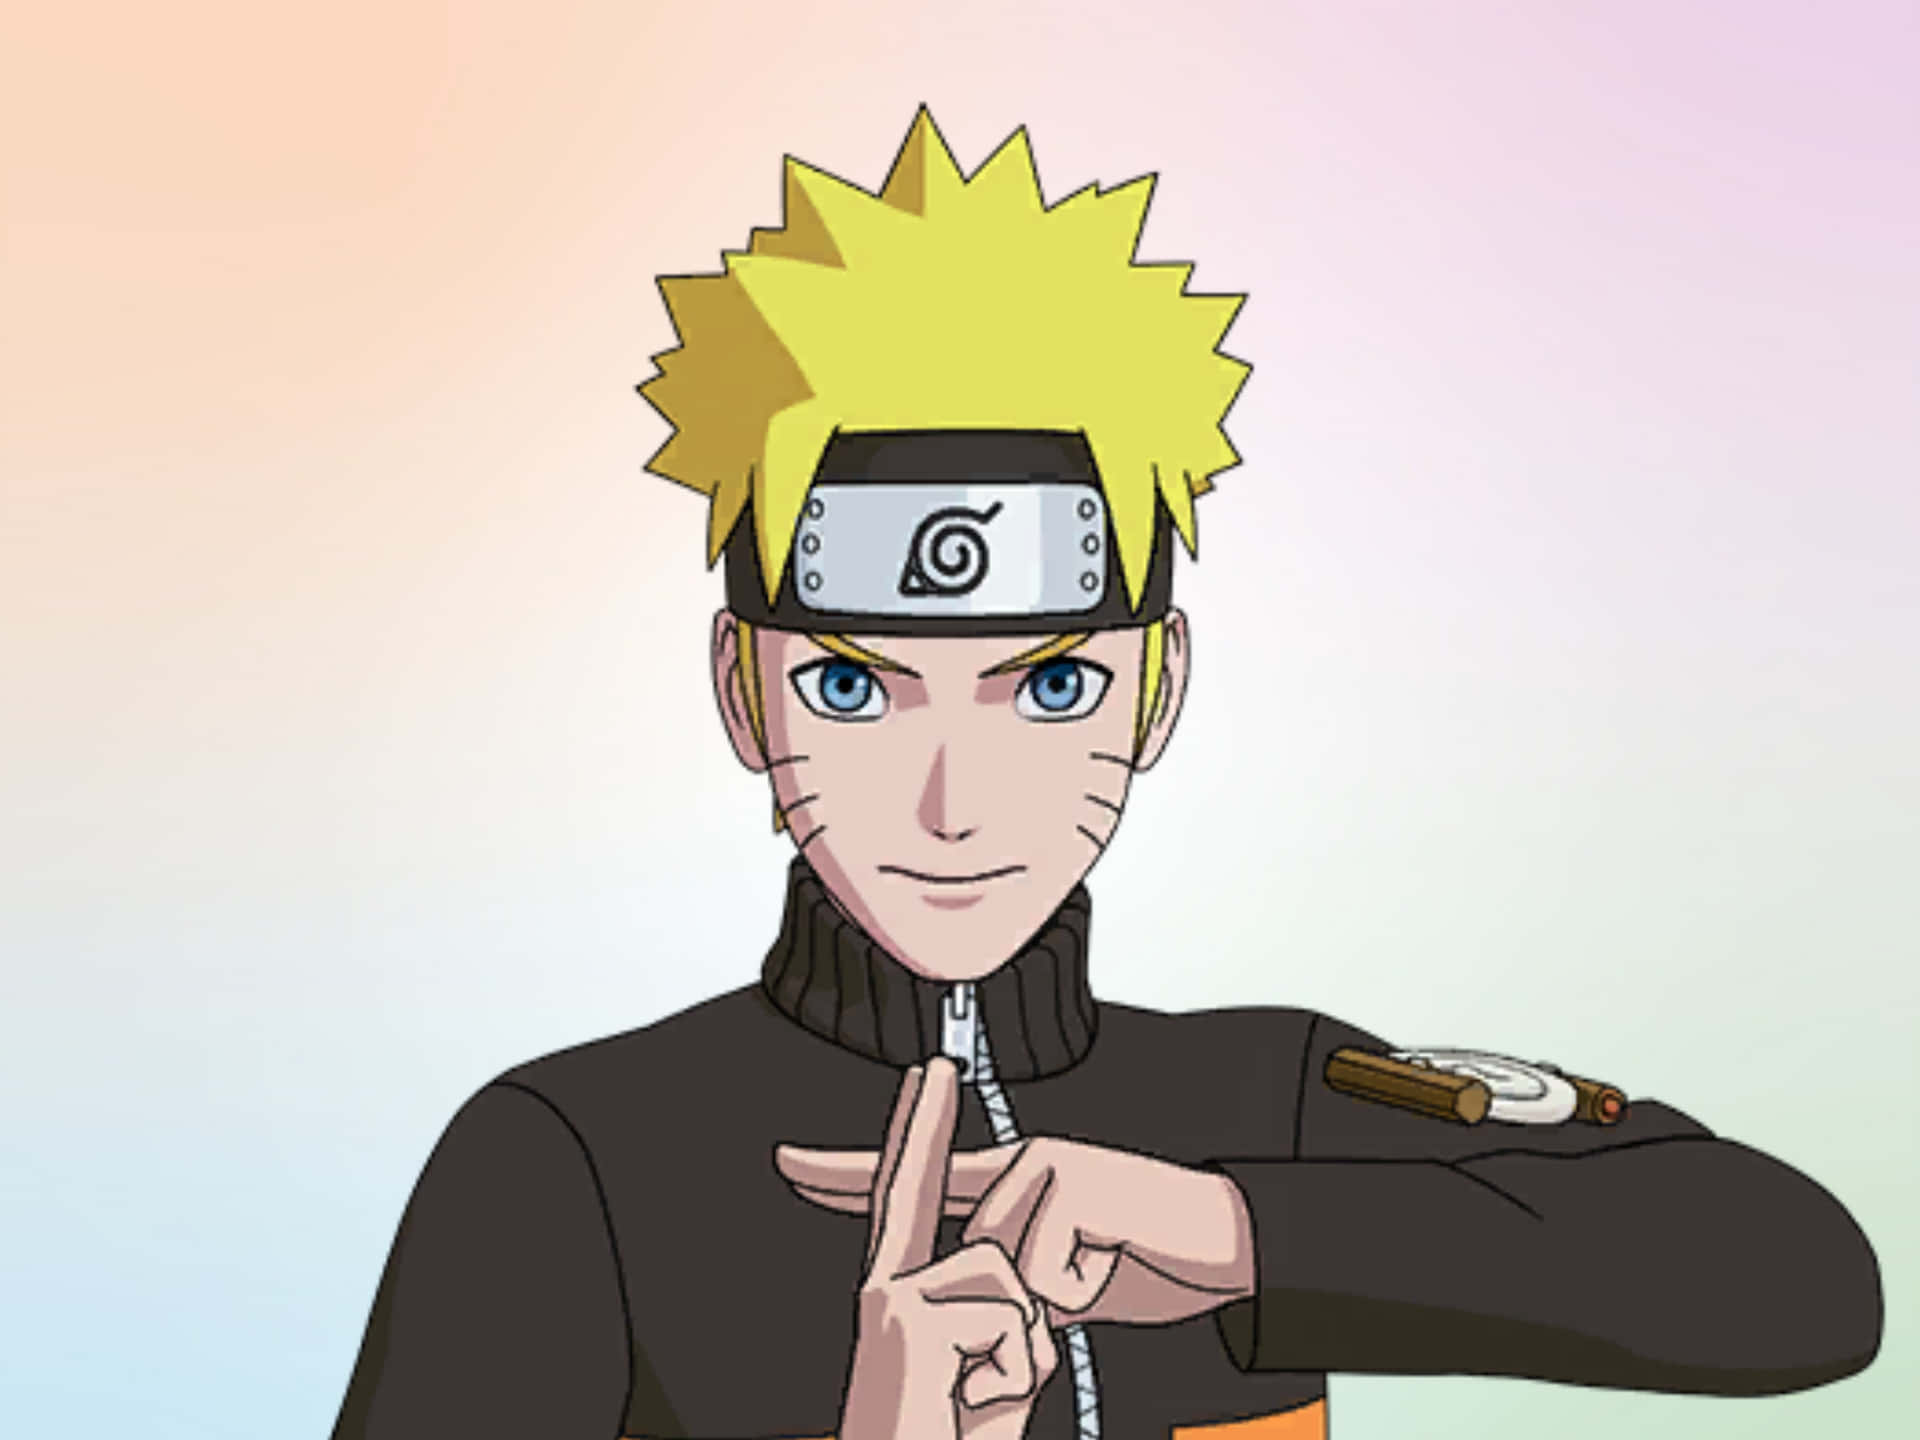 "The Powerful Naruto Uzumaki"